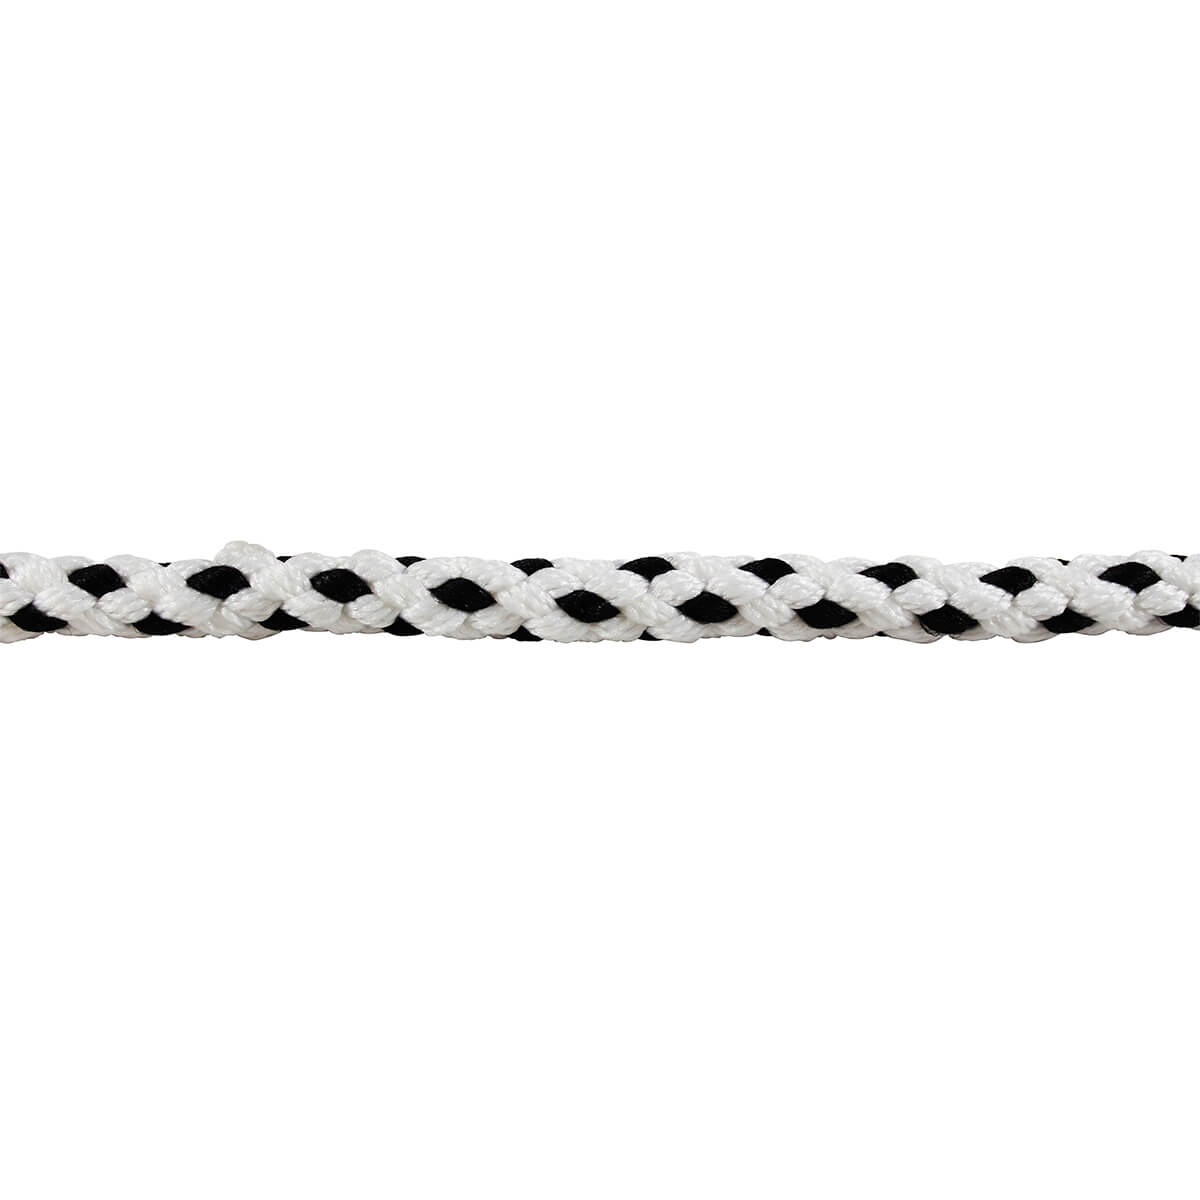 Nylon/Polyester Braided Rope - Black/White - 5/16-in - Price / ft